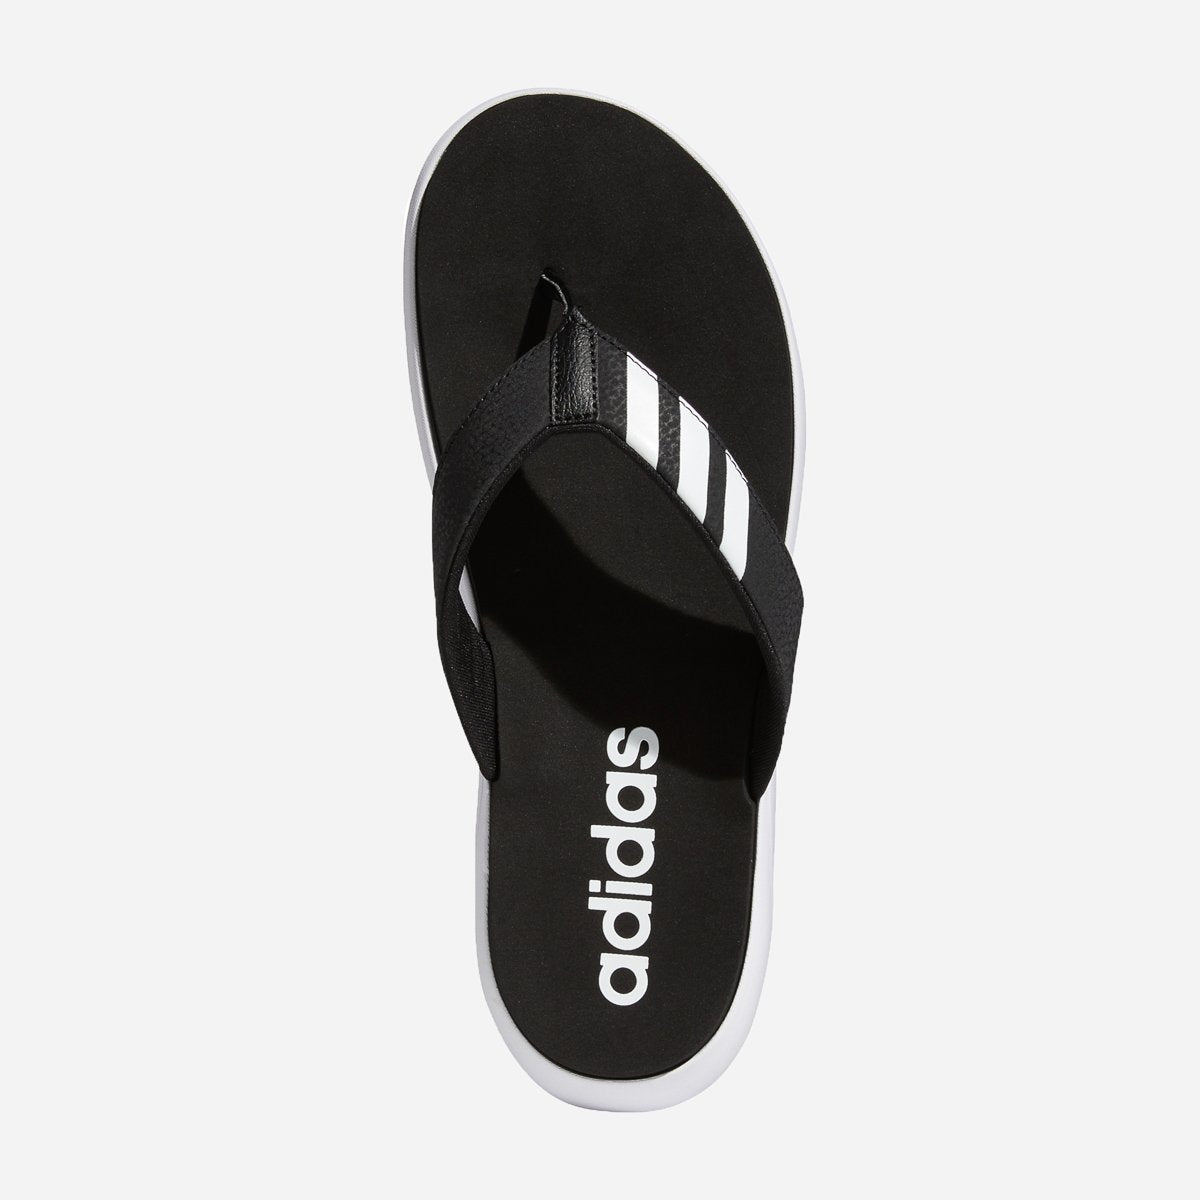 Adidas Men's Comfort Flop Core Black